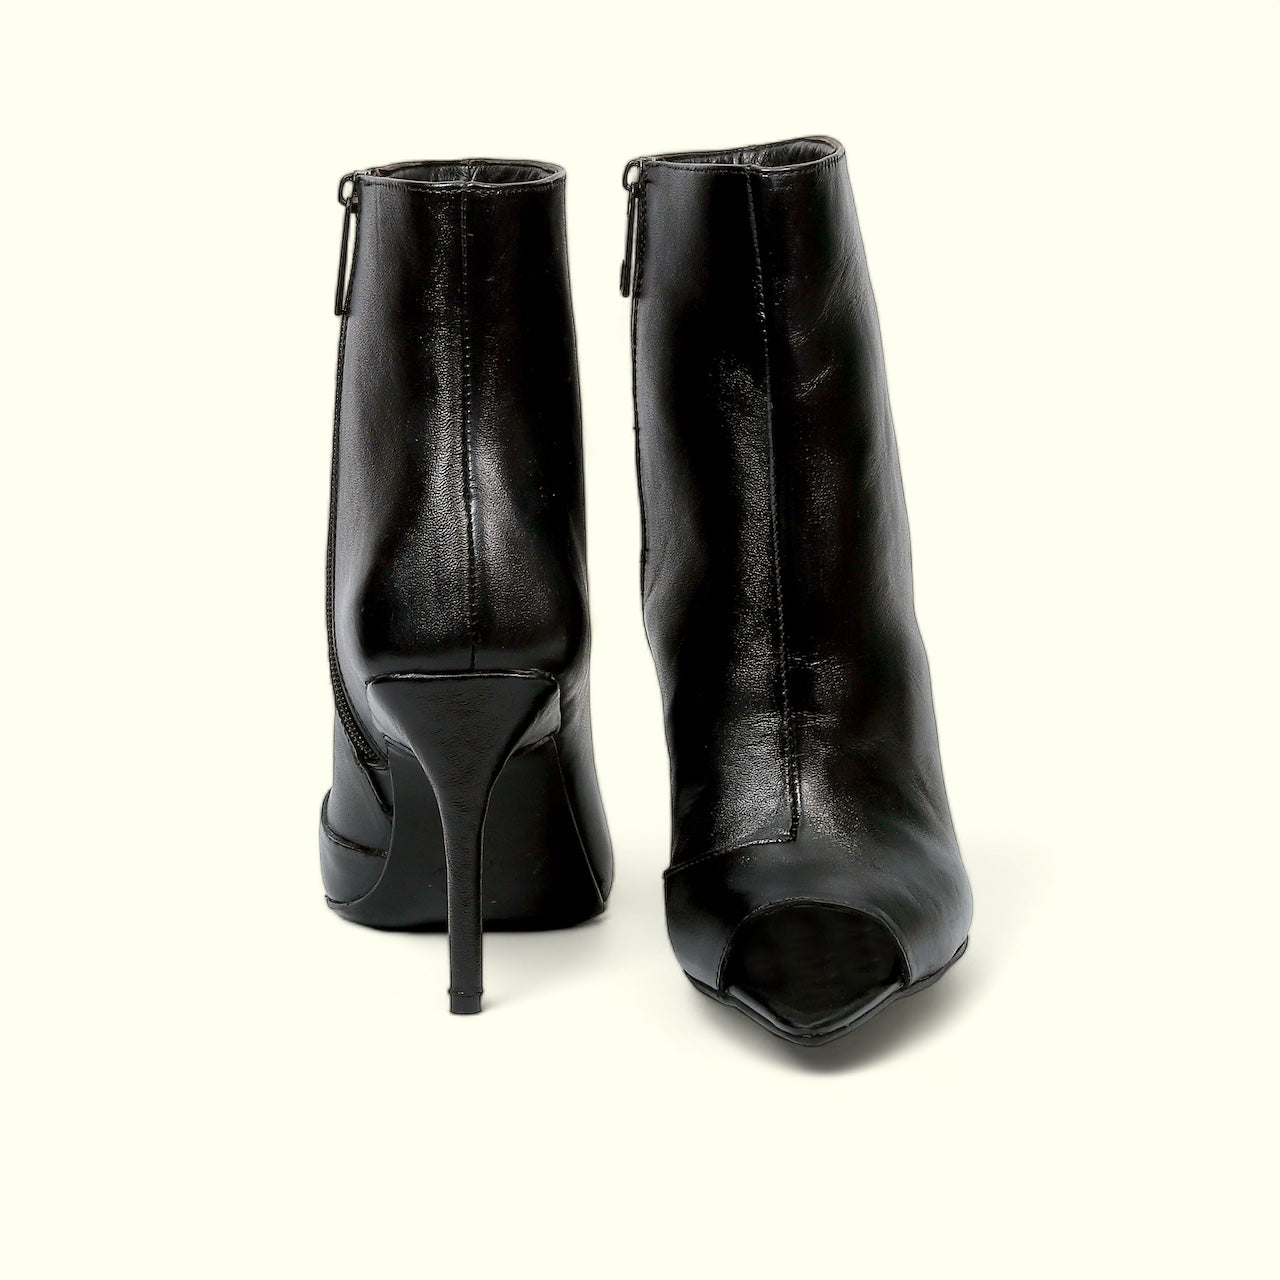 Dacuir Elegance Series Black Stylish Heeled Boots – Fashion Forward and Unapologetically Bold